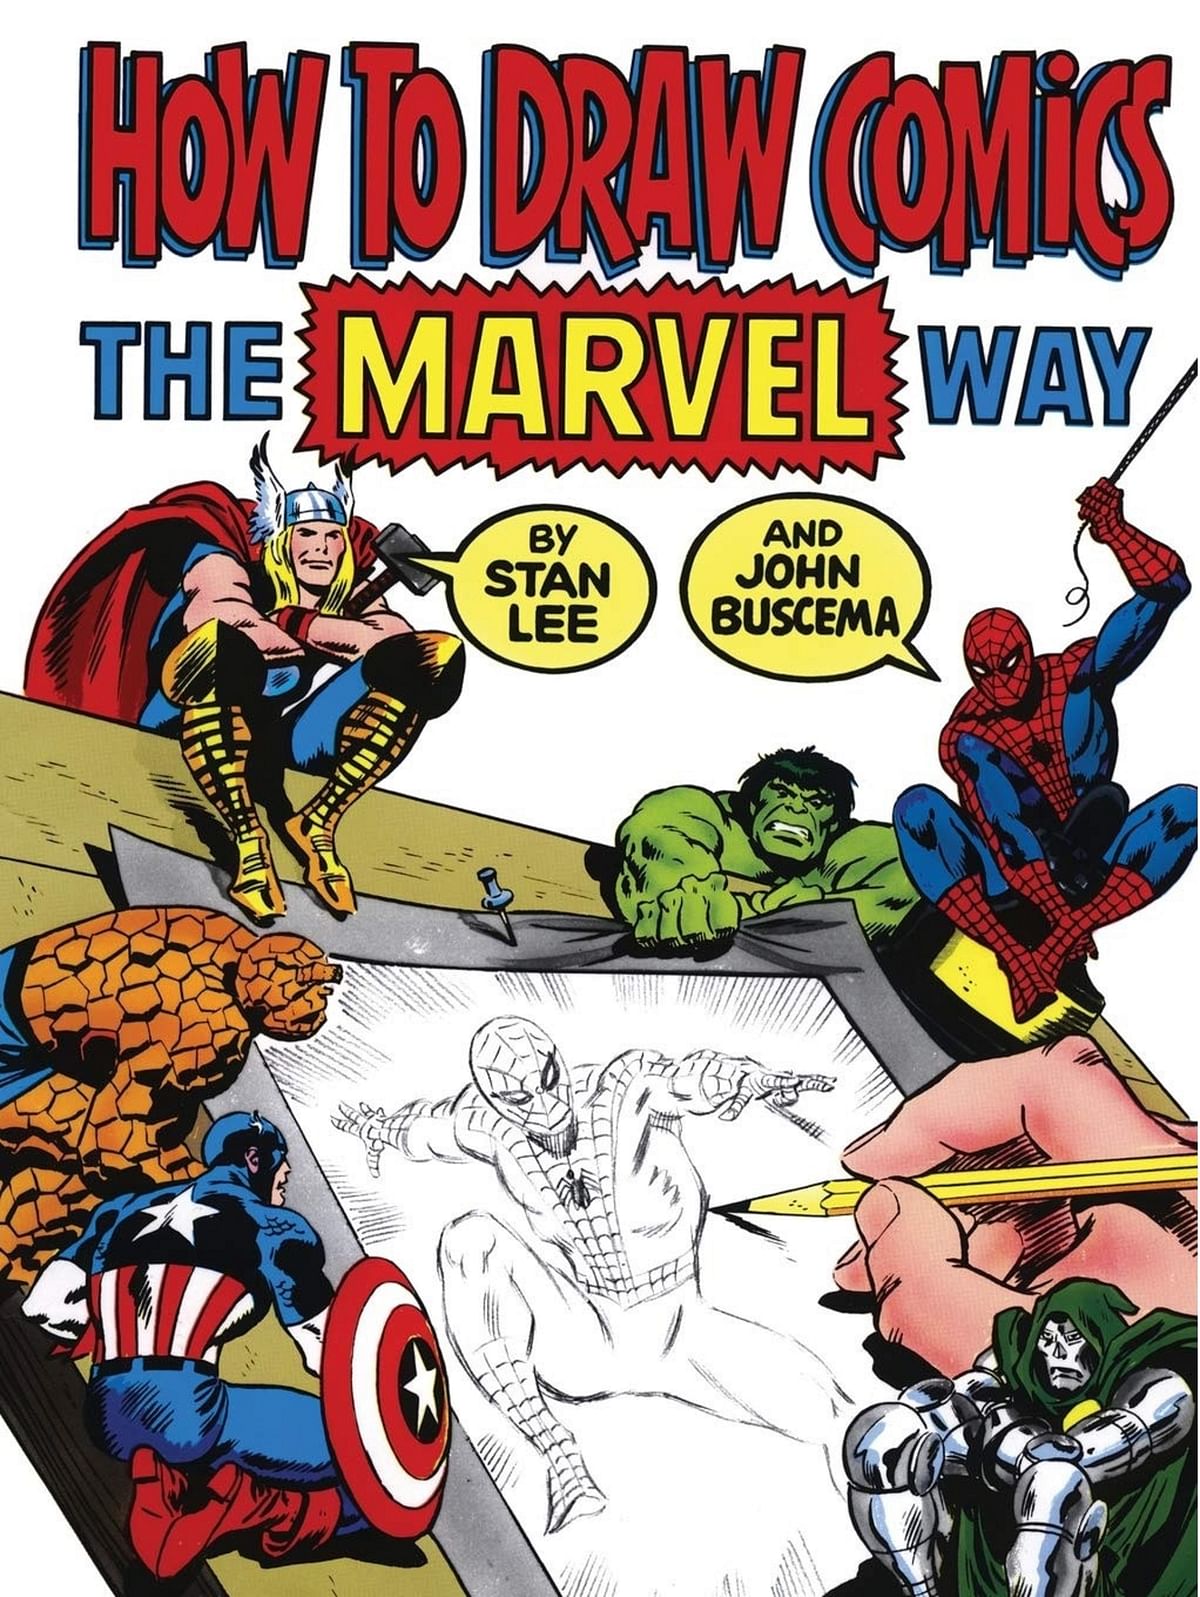 How to Draw Comics the Marvel Way. Credit: Special Arrangement